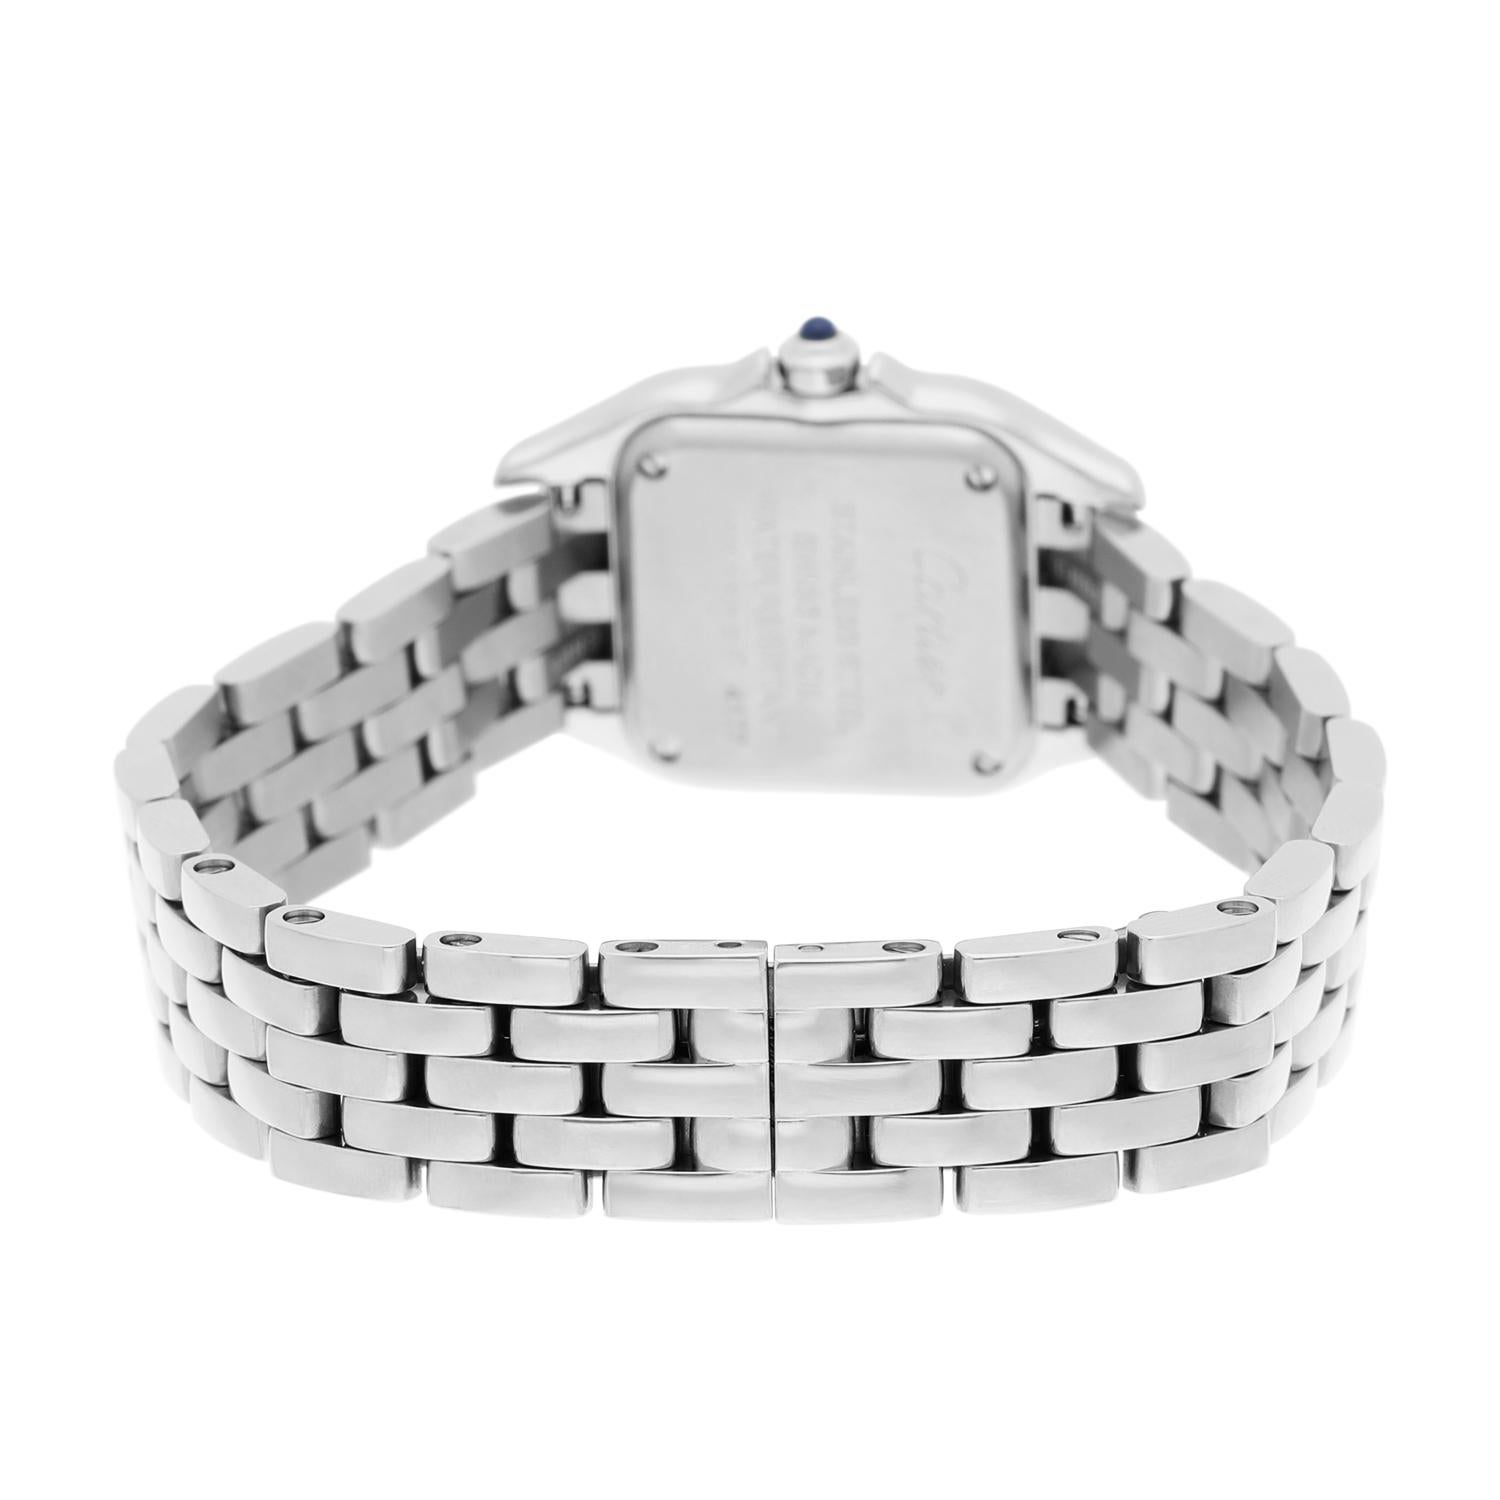 Cartier Panthère De Cartier Small Gray Dial Steel Watch WSPN0010 2022 For Sale 3